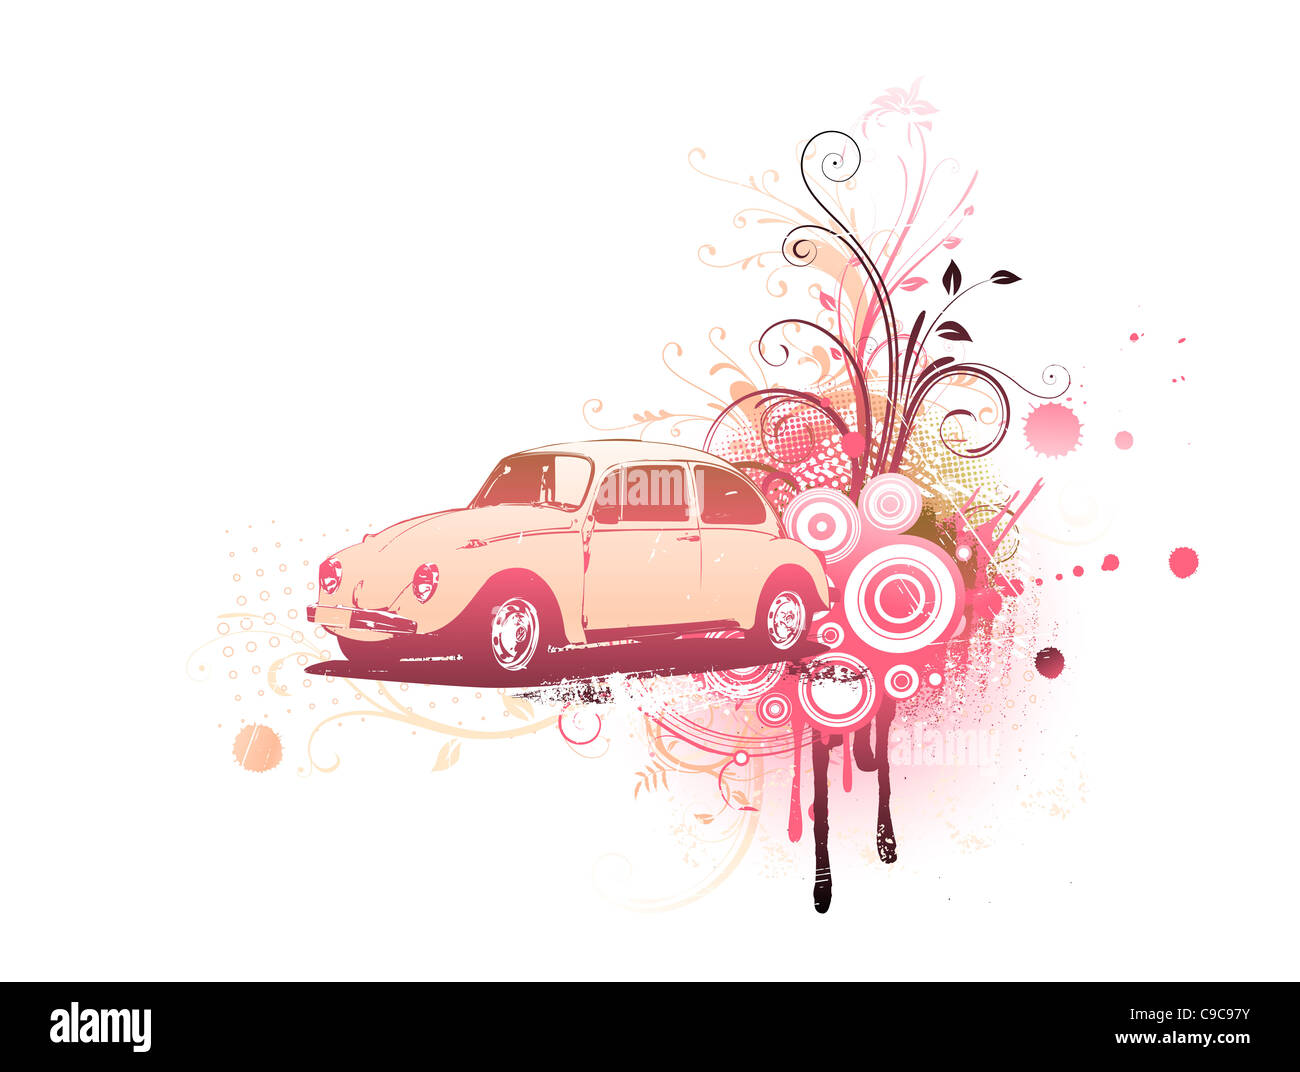 illustration of old custom Volkswagen Beatle on the Grunge Floral Decorative background Stock Photo